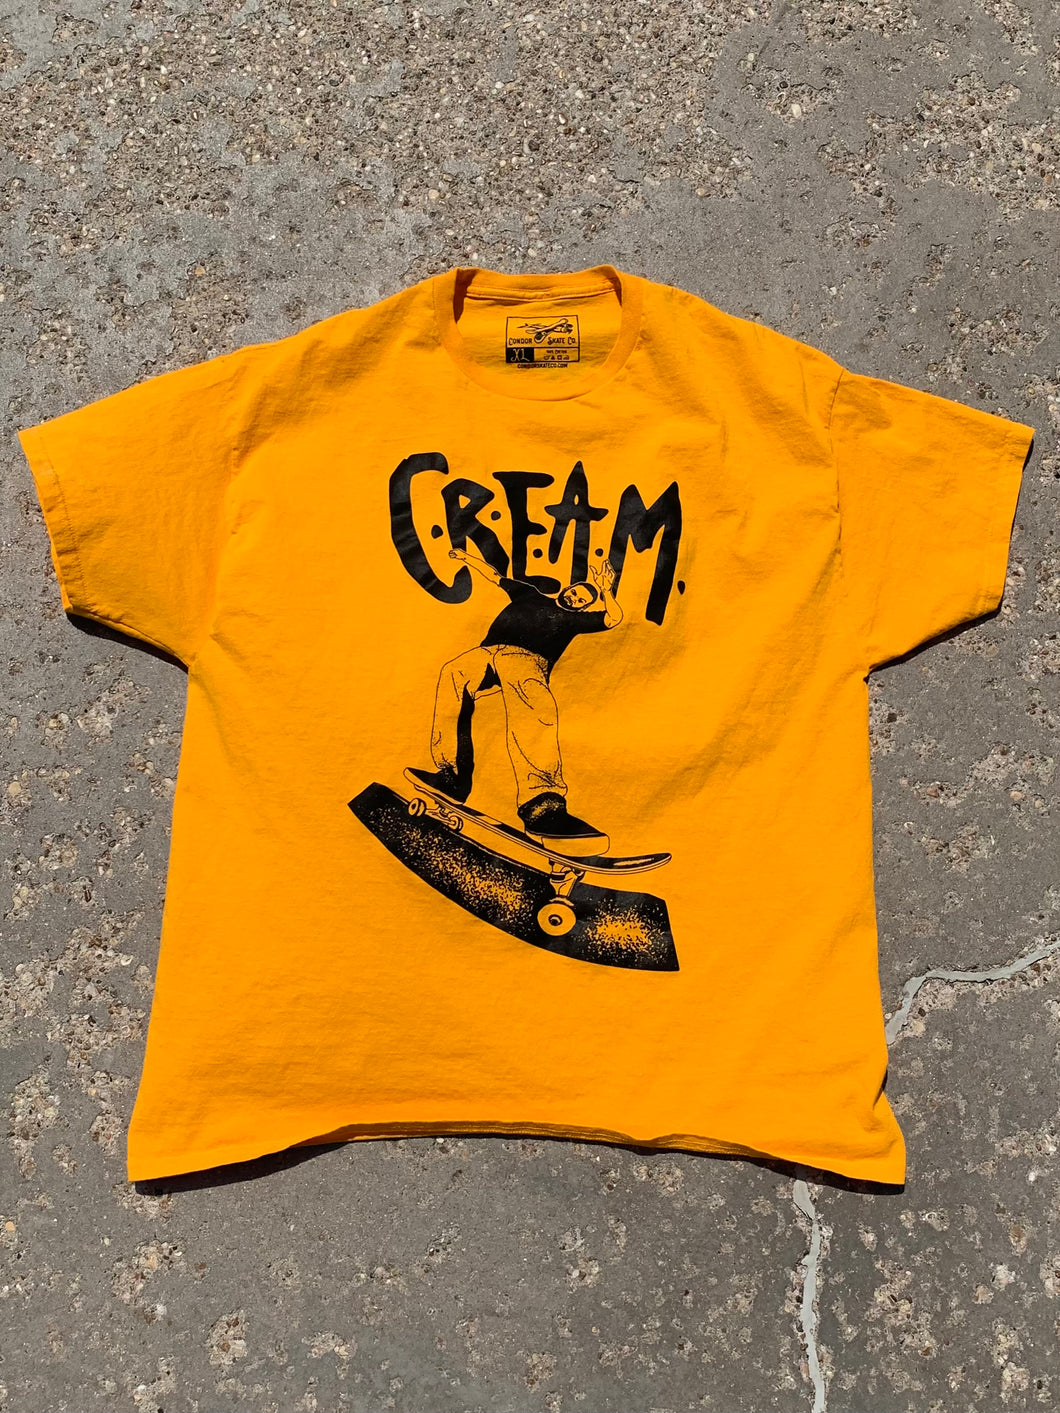 C.R.E.A.M. Shirt (gold)